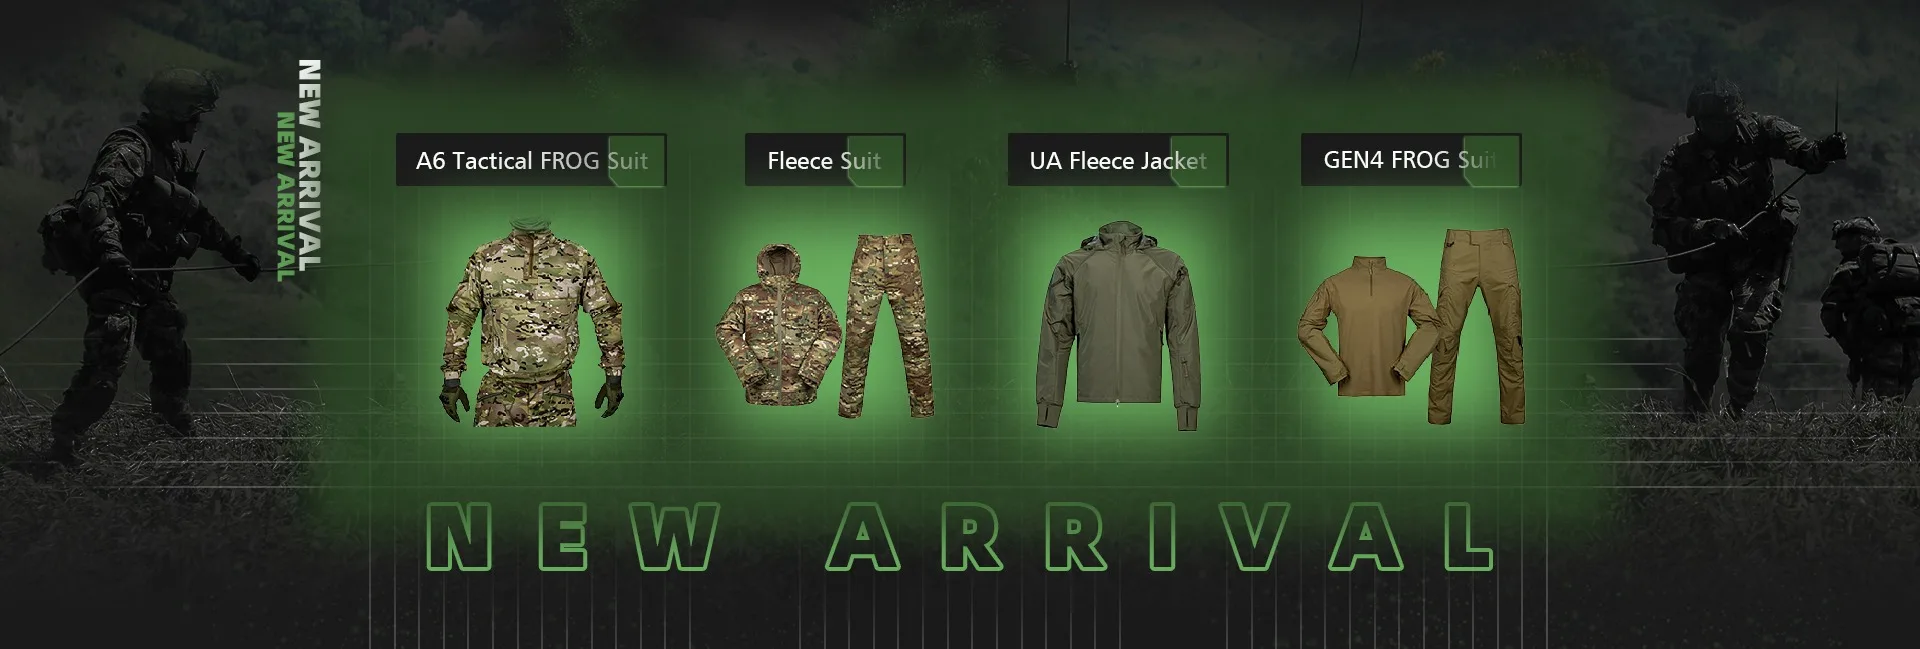 Frog-Suit-Manufacturer-Israeli-Military-Uniform-Wholesale2